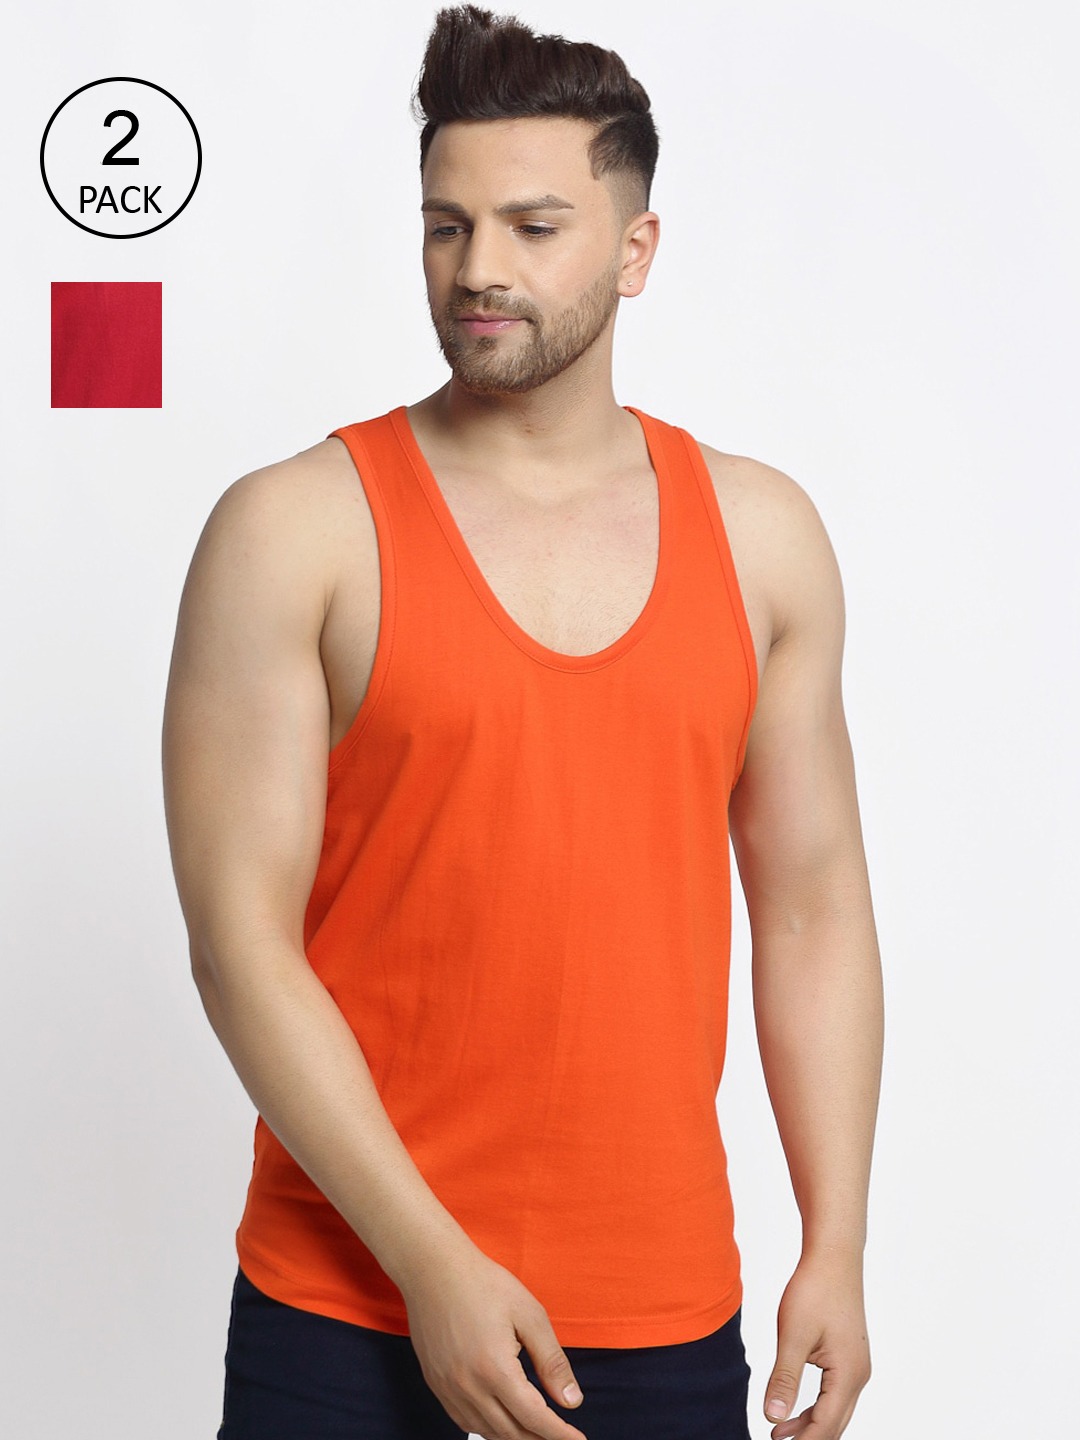 Clothing Innerwear Vests | Friskers Men Pack Of 2 Maroon and Orange Solid Pure Cotton Drop-Cut Innerwear Vests - MM98039